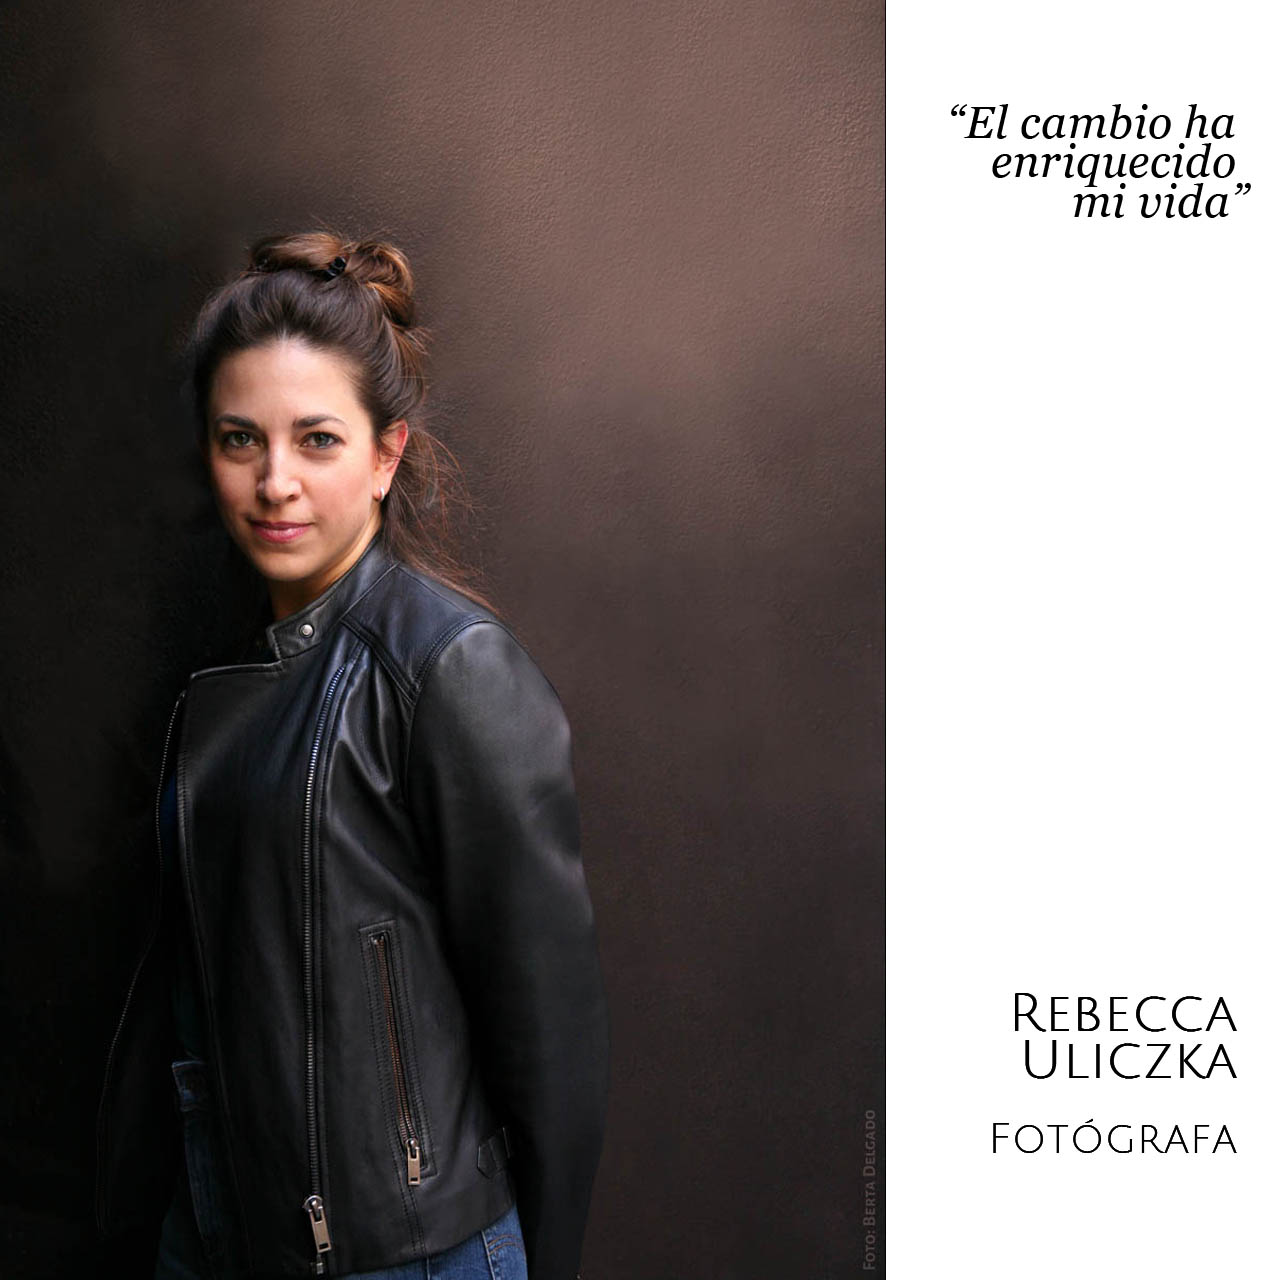 Rebecca Uliczka - Fotografa